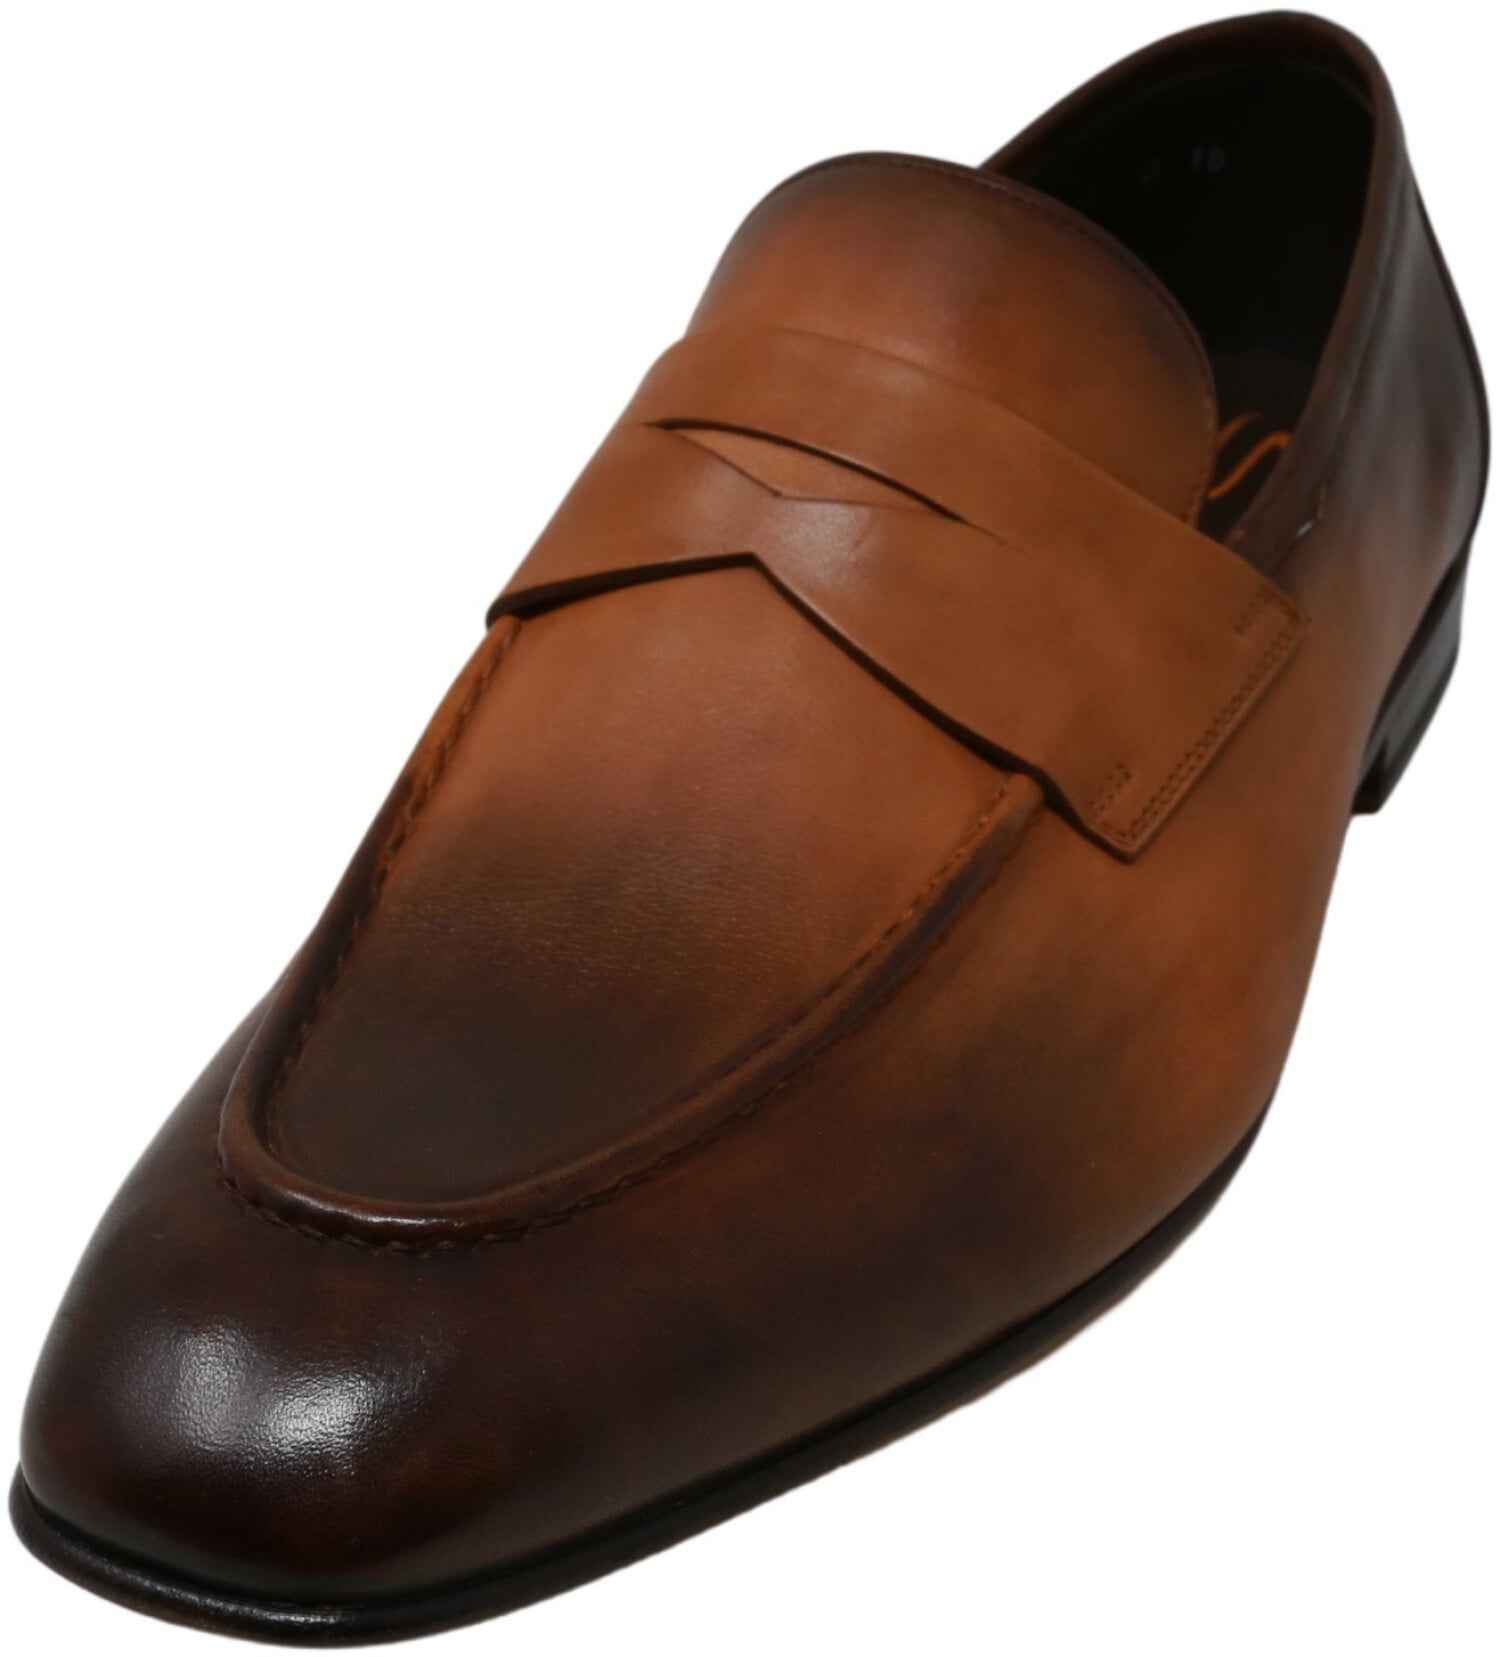 santoni casual shoes